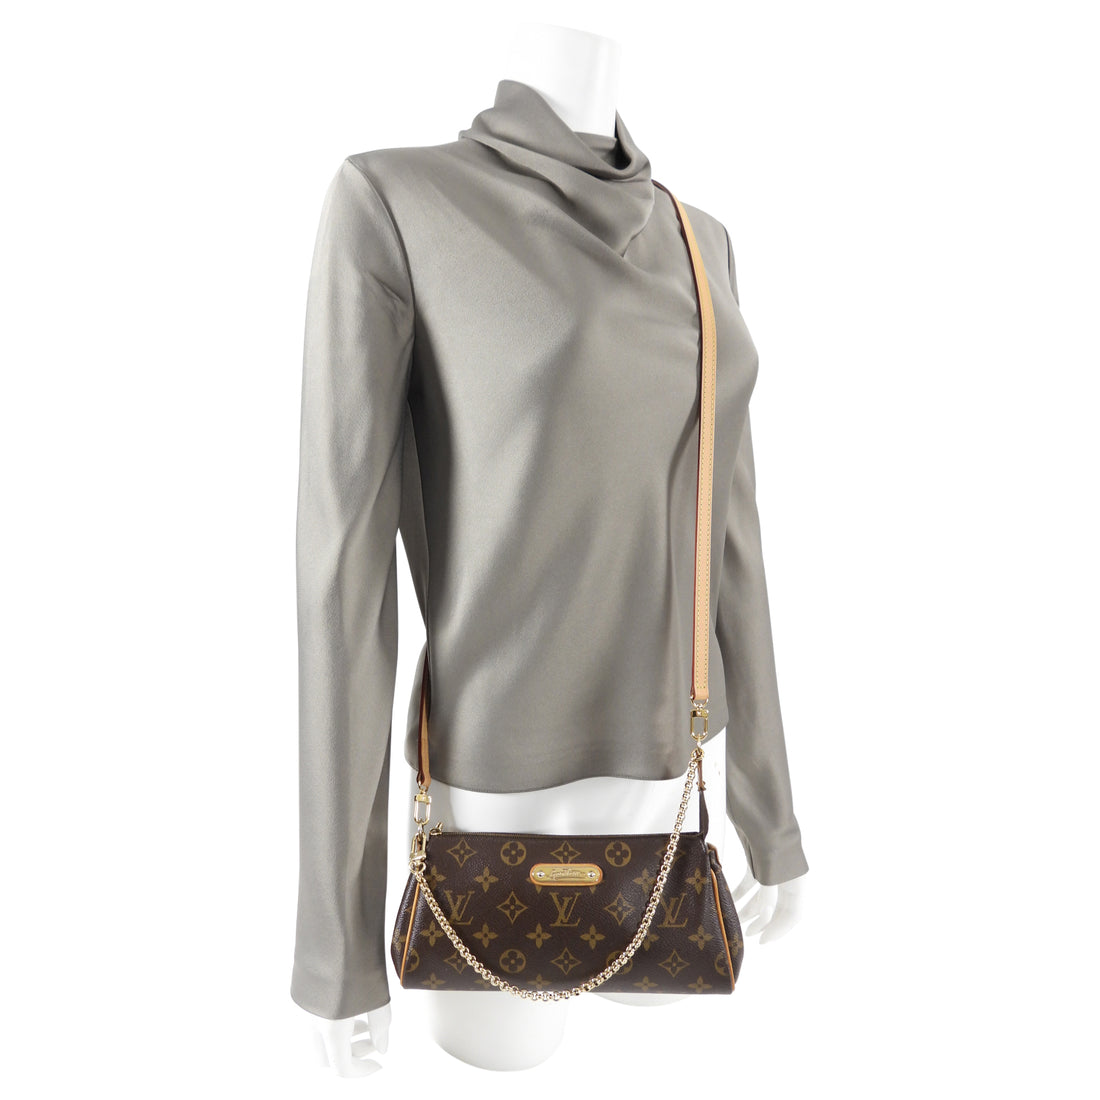 Louis Vuitton Monogram Eva Clutch Two-Way Pochette Bag – I MISS YOU VINTAGE